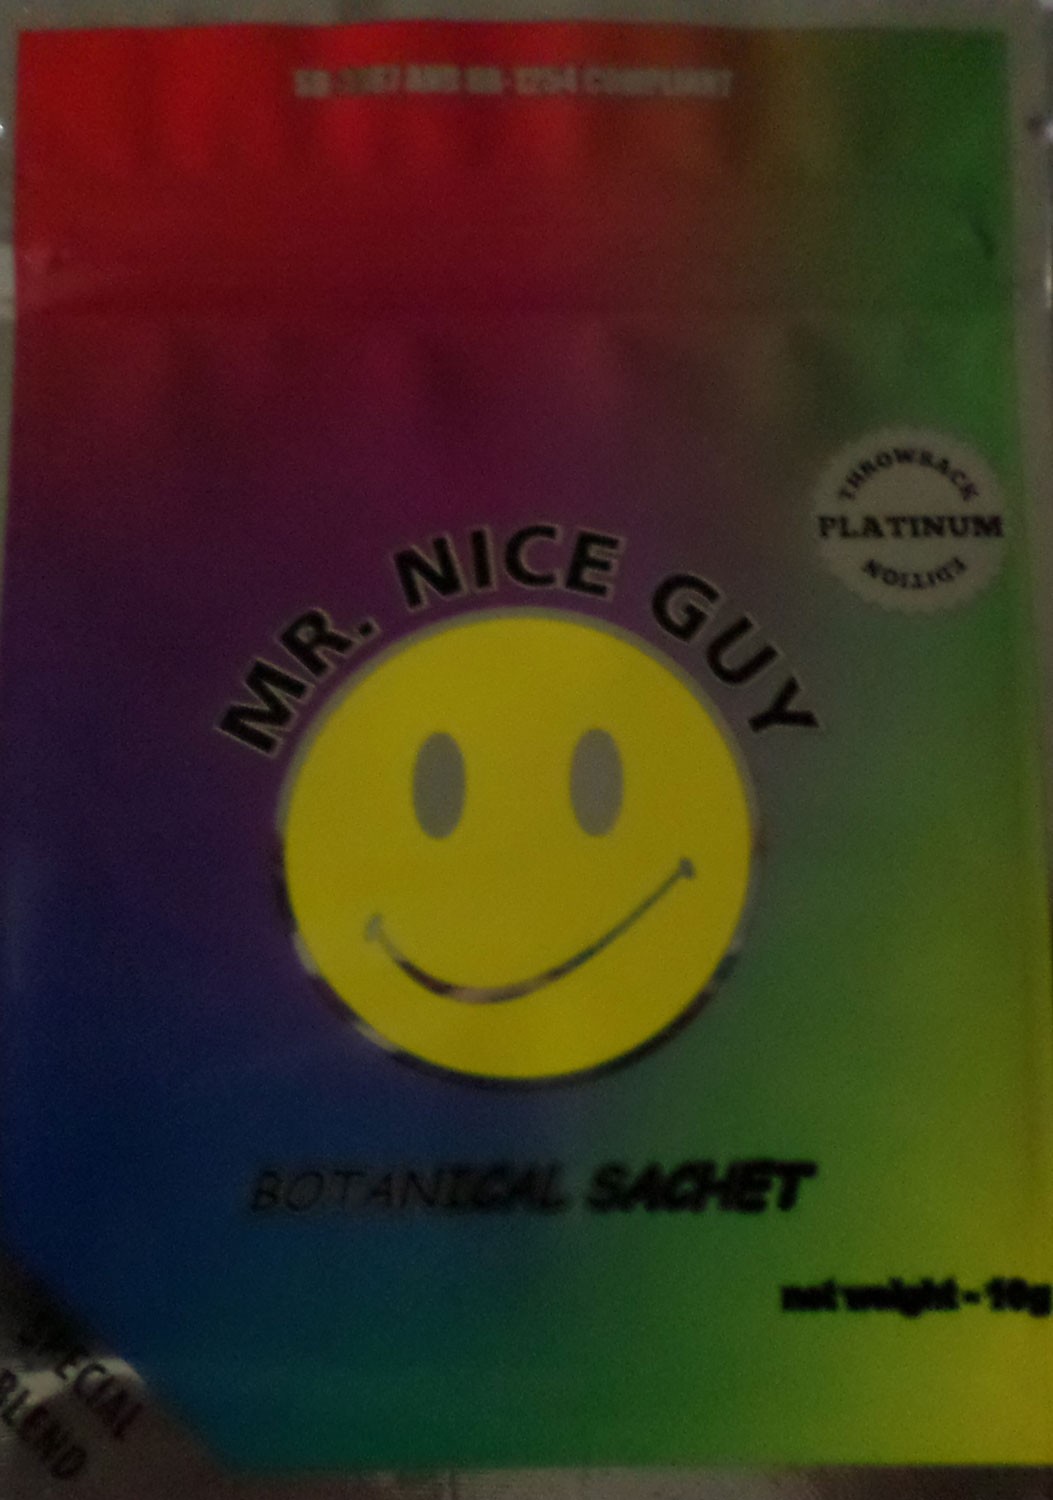 Mr Nice guy 10g incense platinum